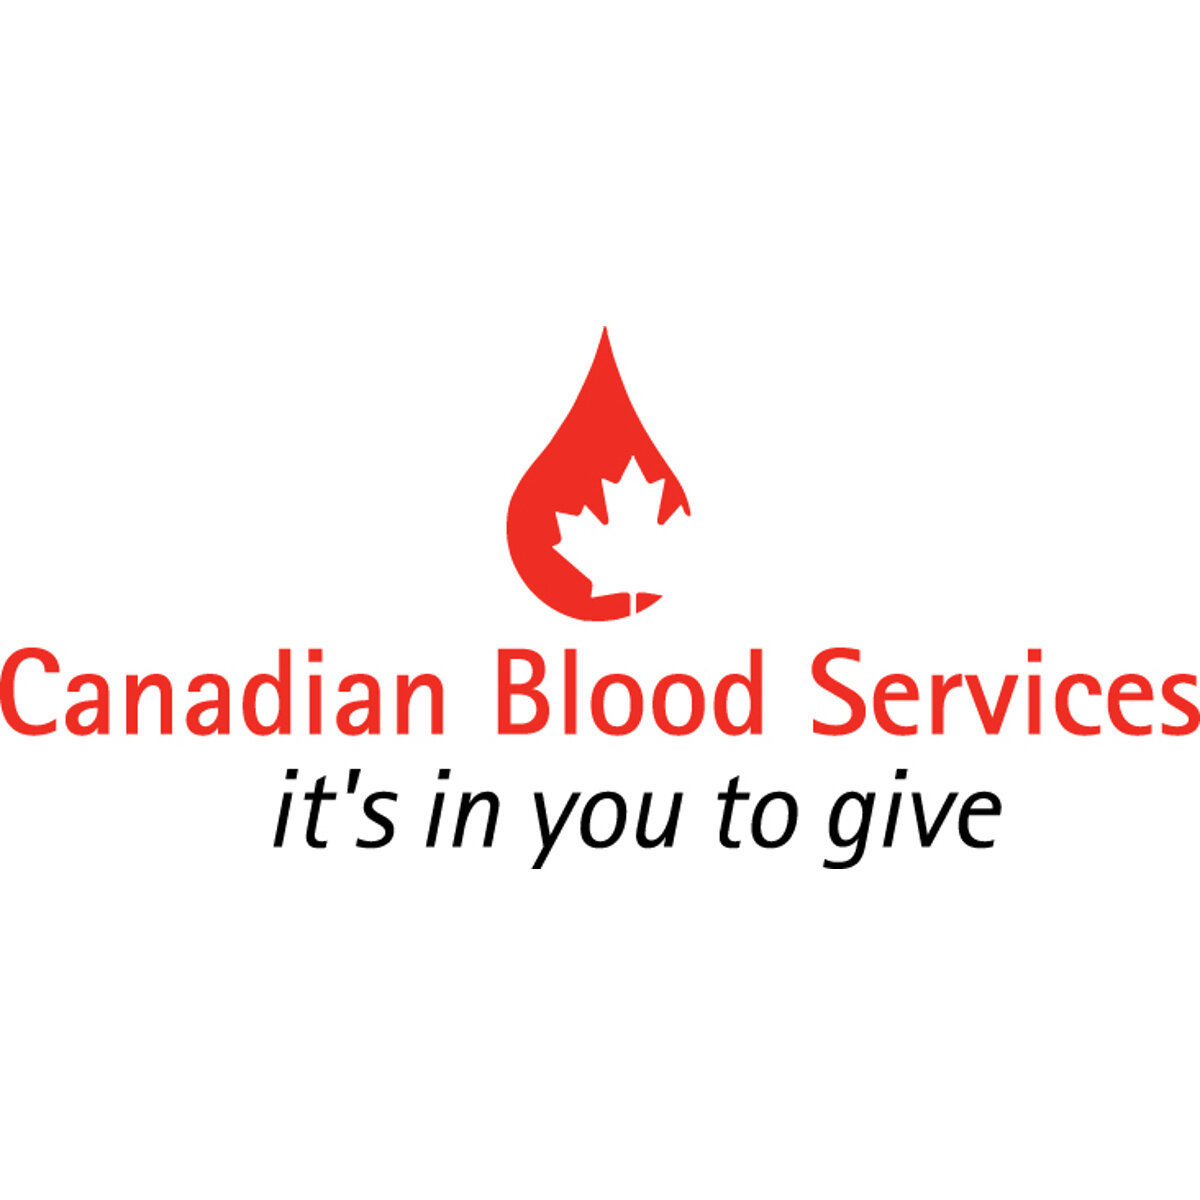 Cdn blood services.jpg